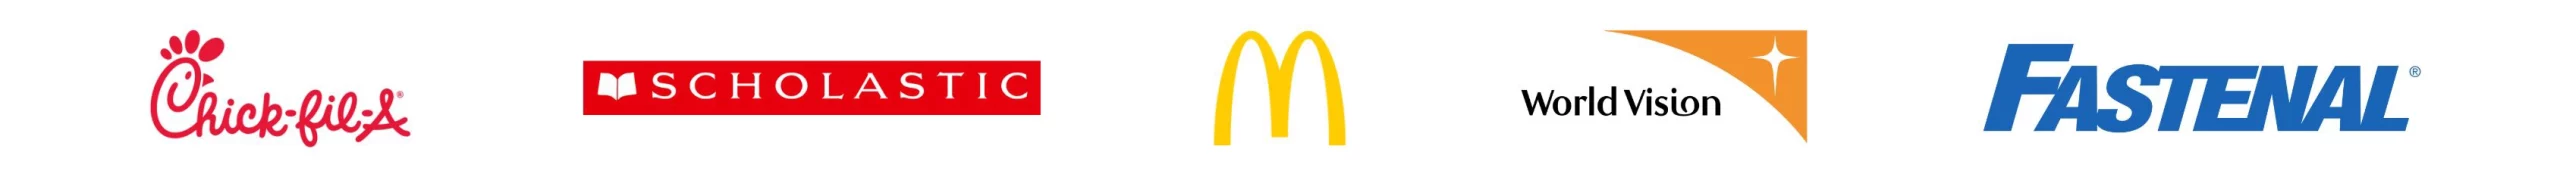 Chick-fila logo, Scholastic logo, McDonlads logo, World Vision logo, FAstenal logo